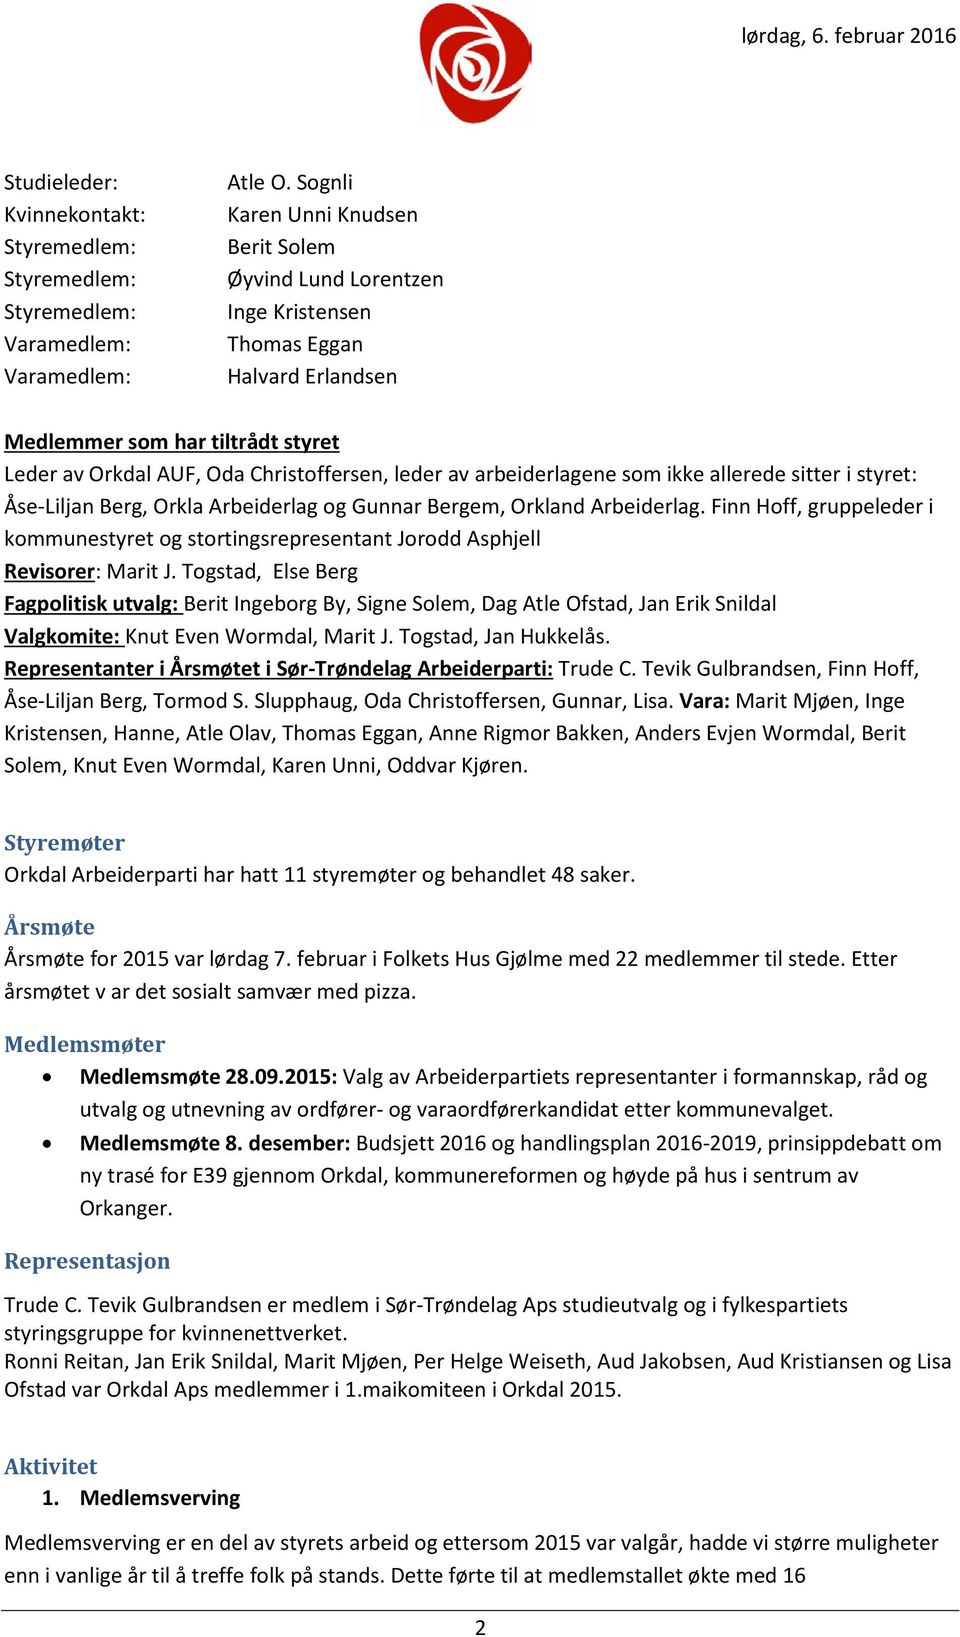 Årsmøte i Orkdal Arbeiderparti Lørdag 6. februar 2016 kl Folkets Hus Gjølme  - PDF Free Download